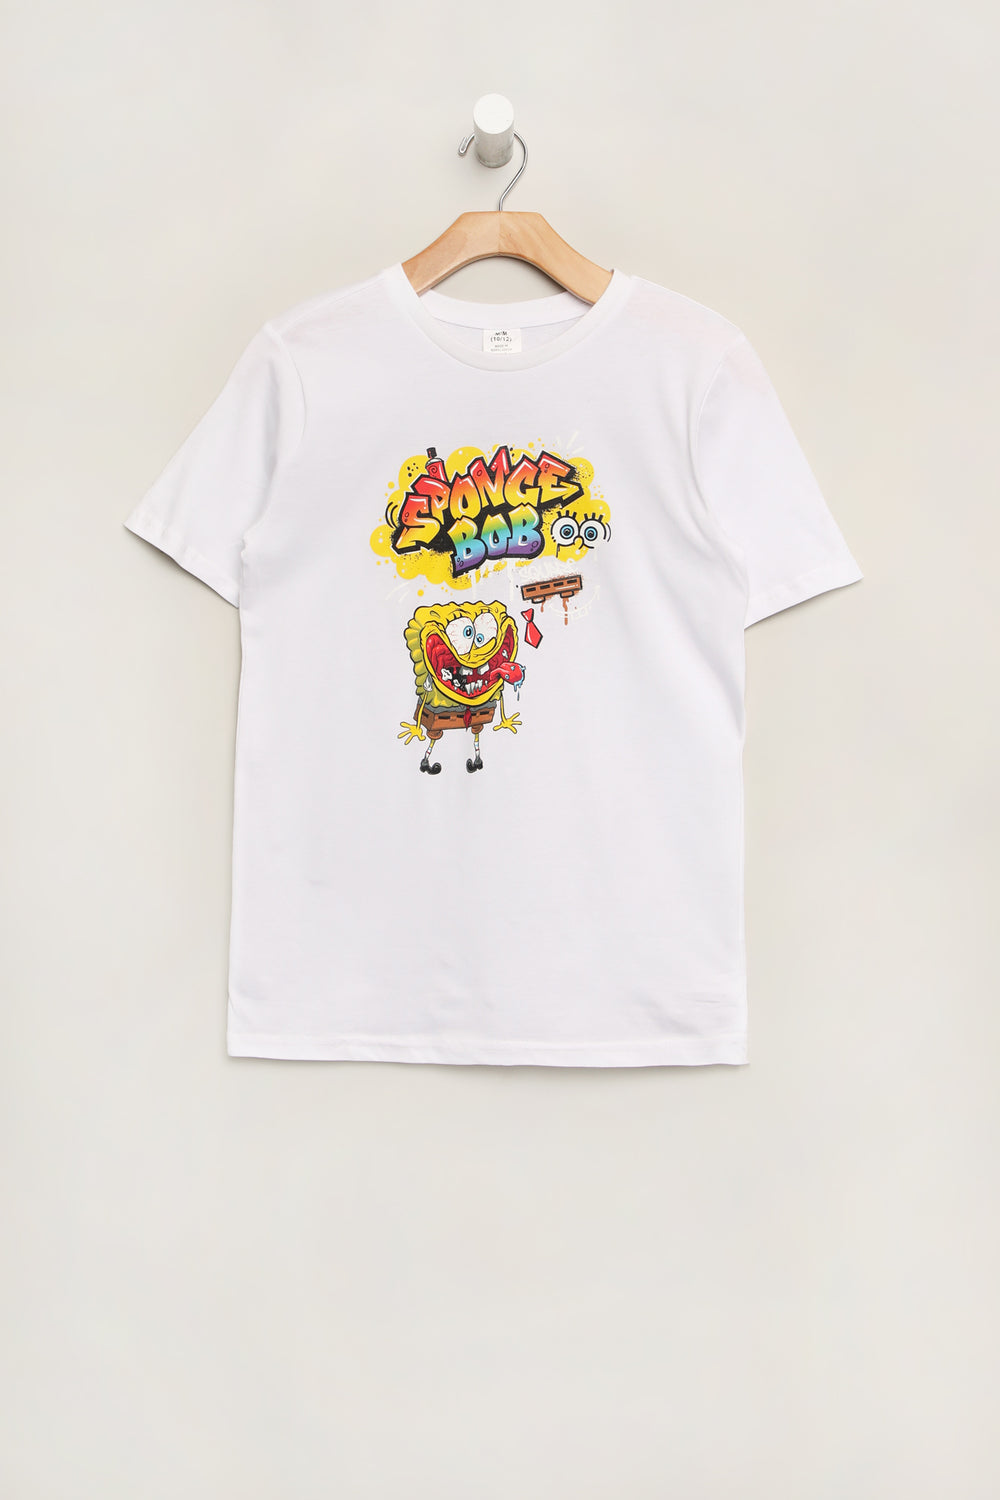 T-Shirt Imprimé Graffiti SpongeBob Junior T-Shirt Imprimé Graffiti SpongeBob Junior